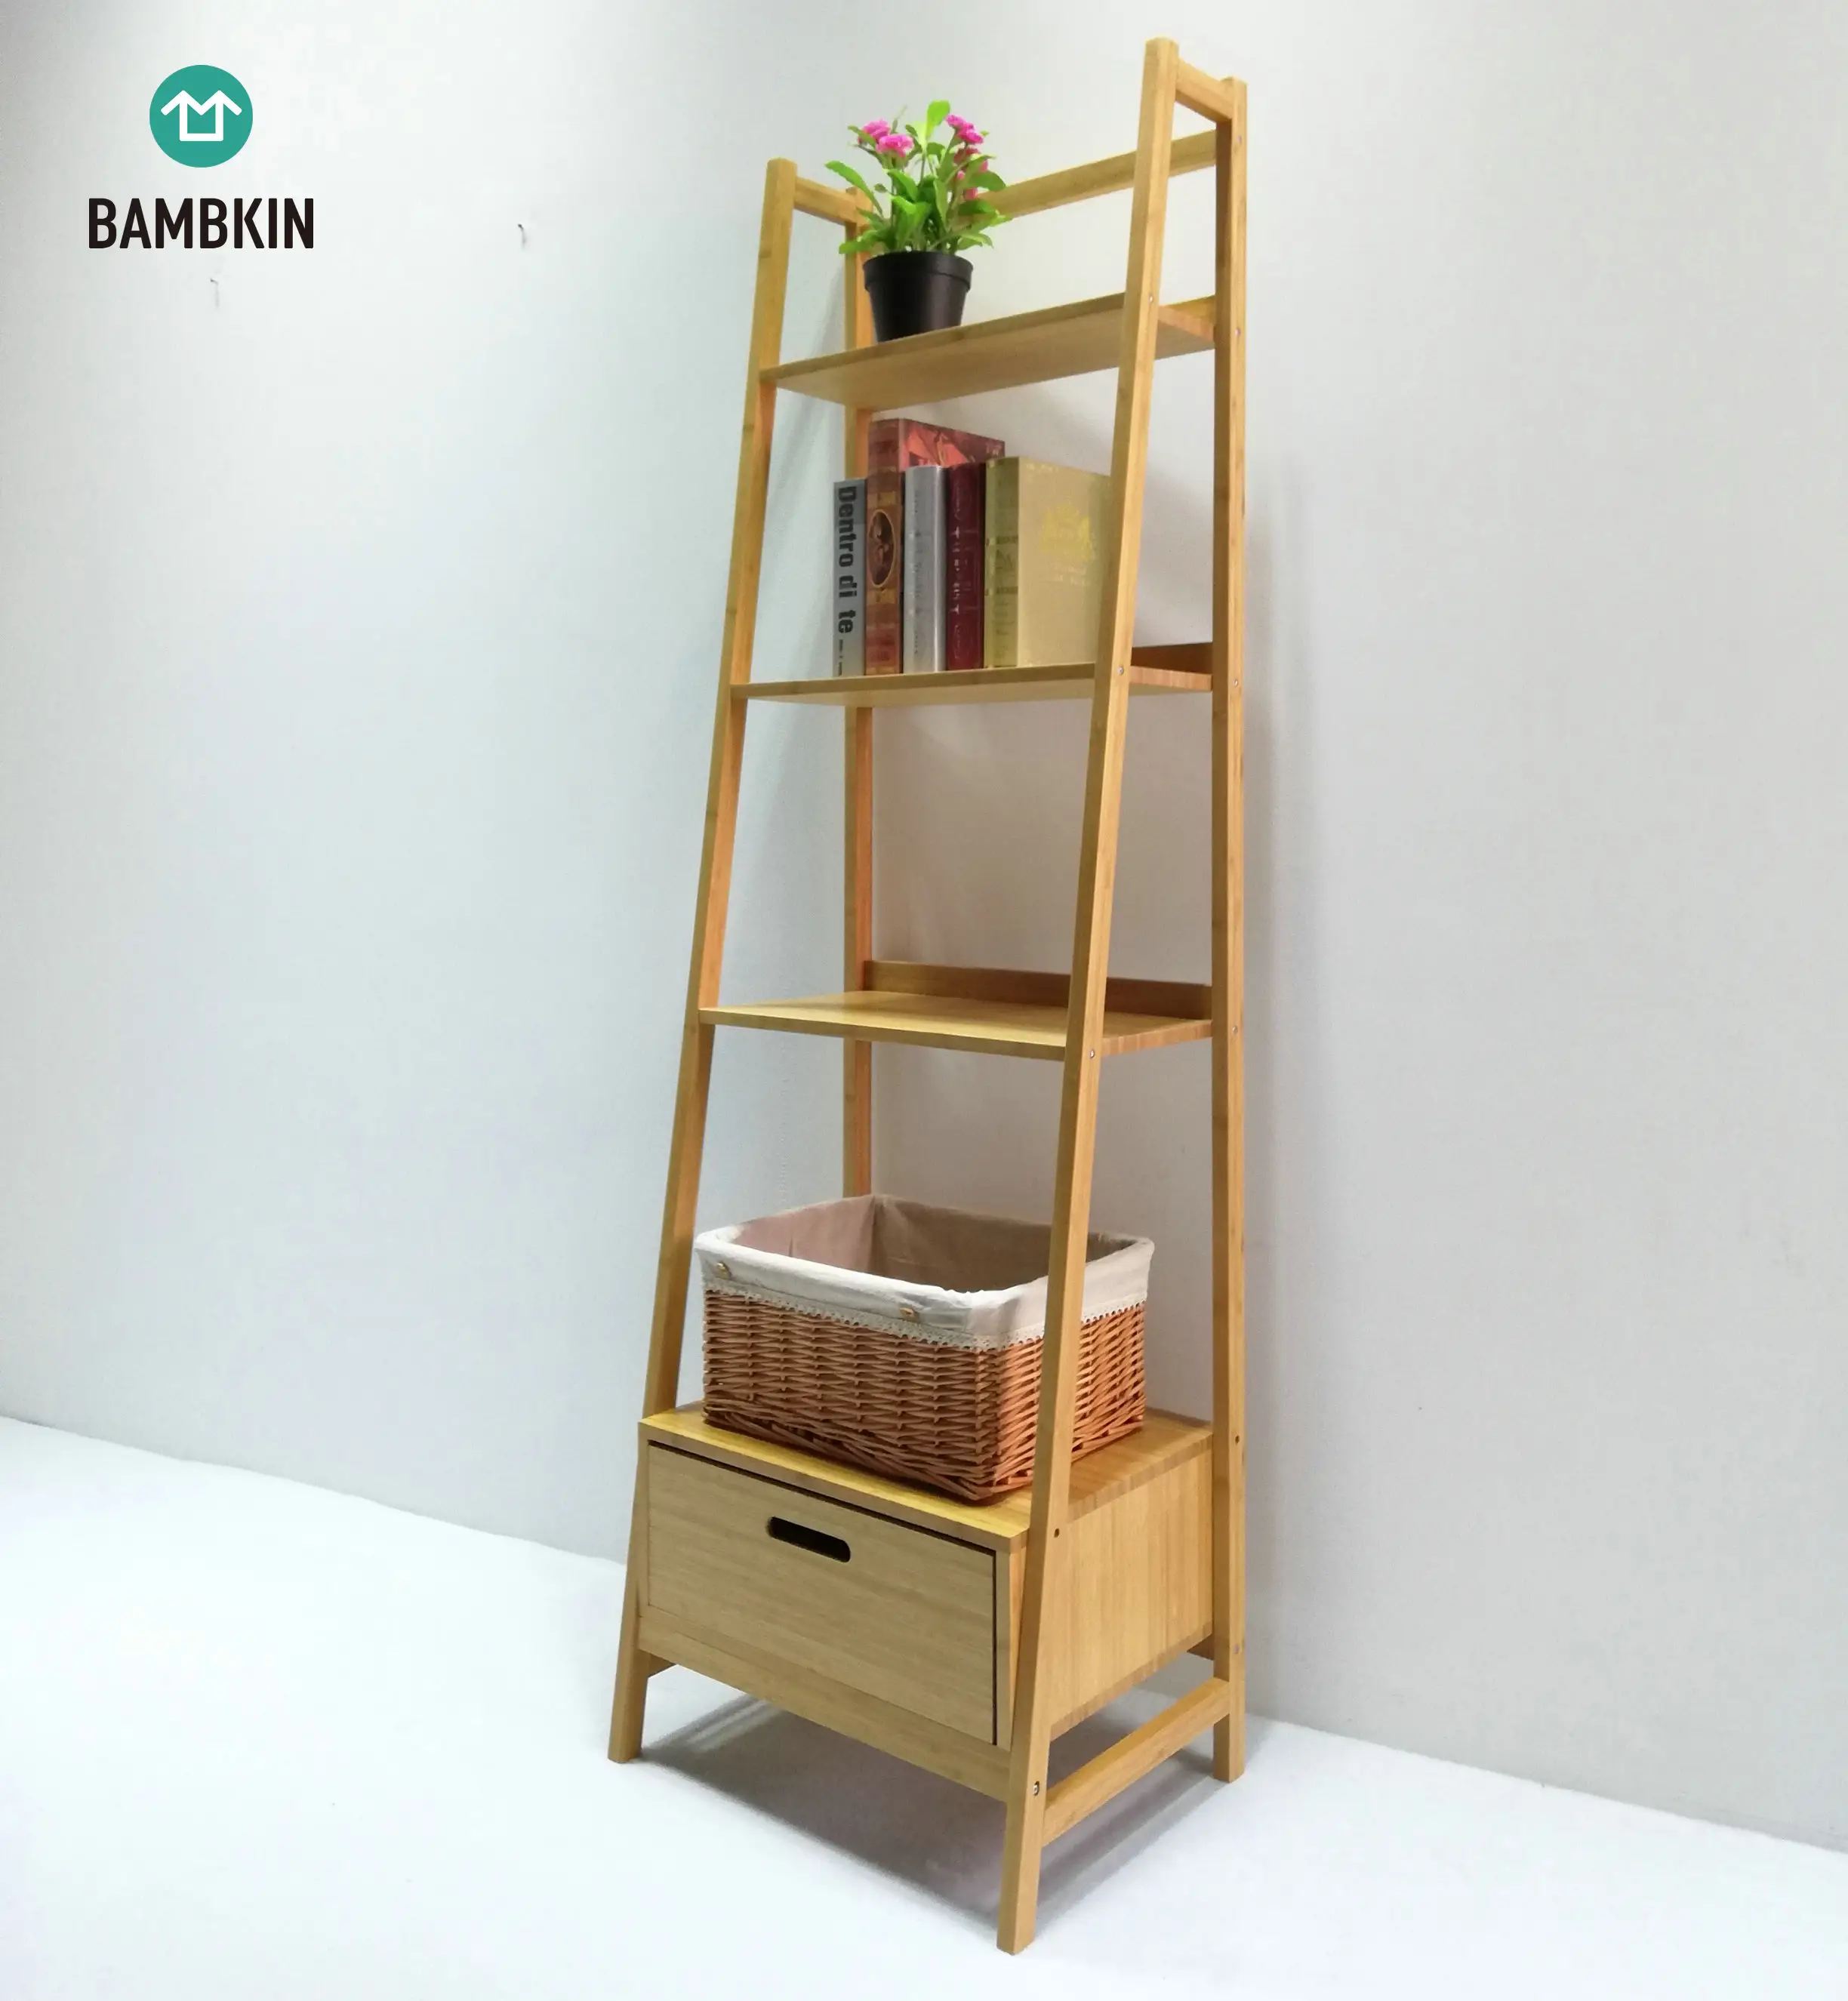 BAMBKIN bamboo storage shelf bamboo cabinets for living room rack